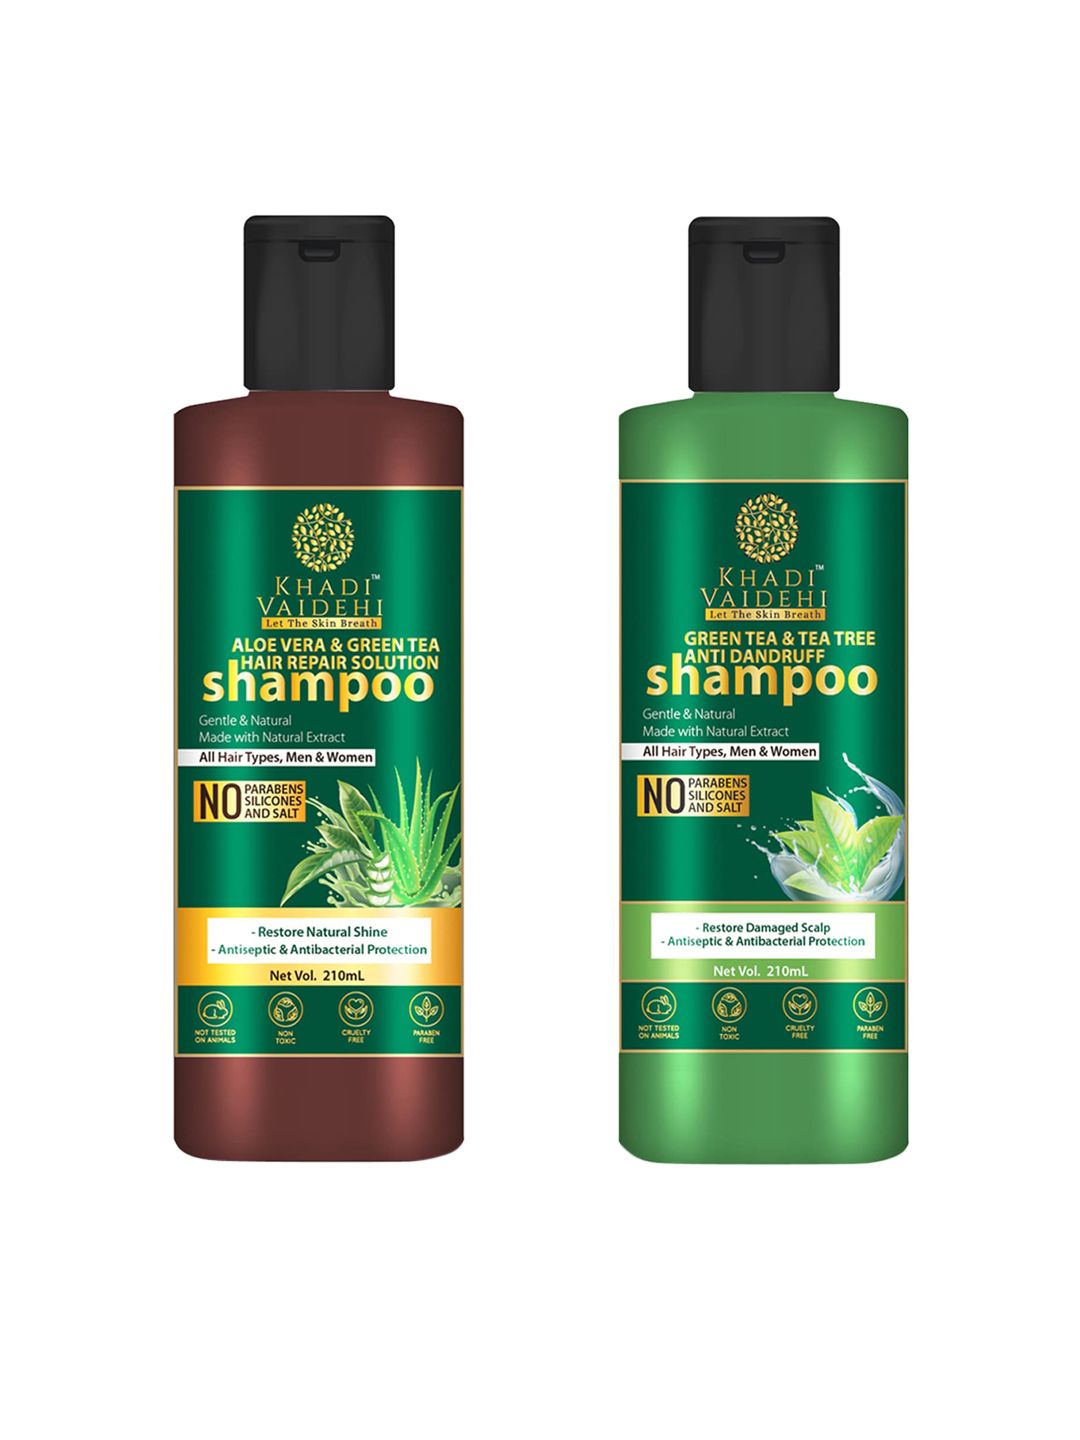 Khadi Vaidehi Set of 2 Paraben-Free Shampoos for All Hair Types - 210ml each Price in India